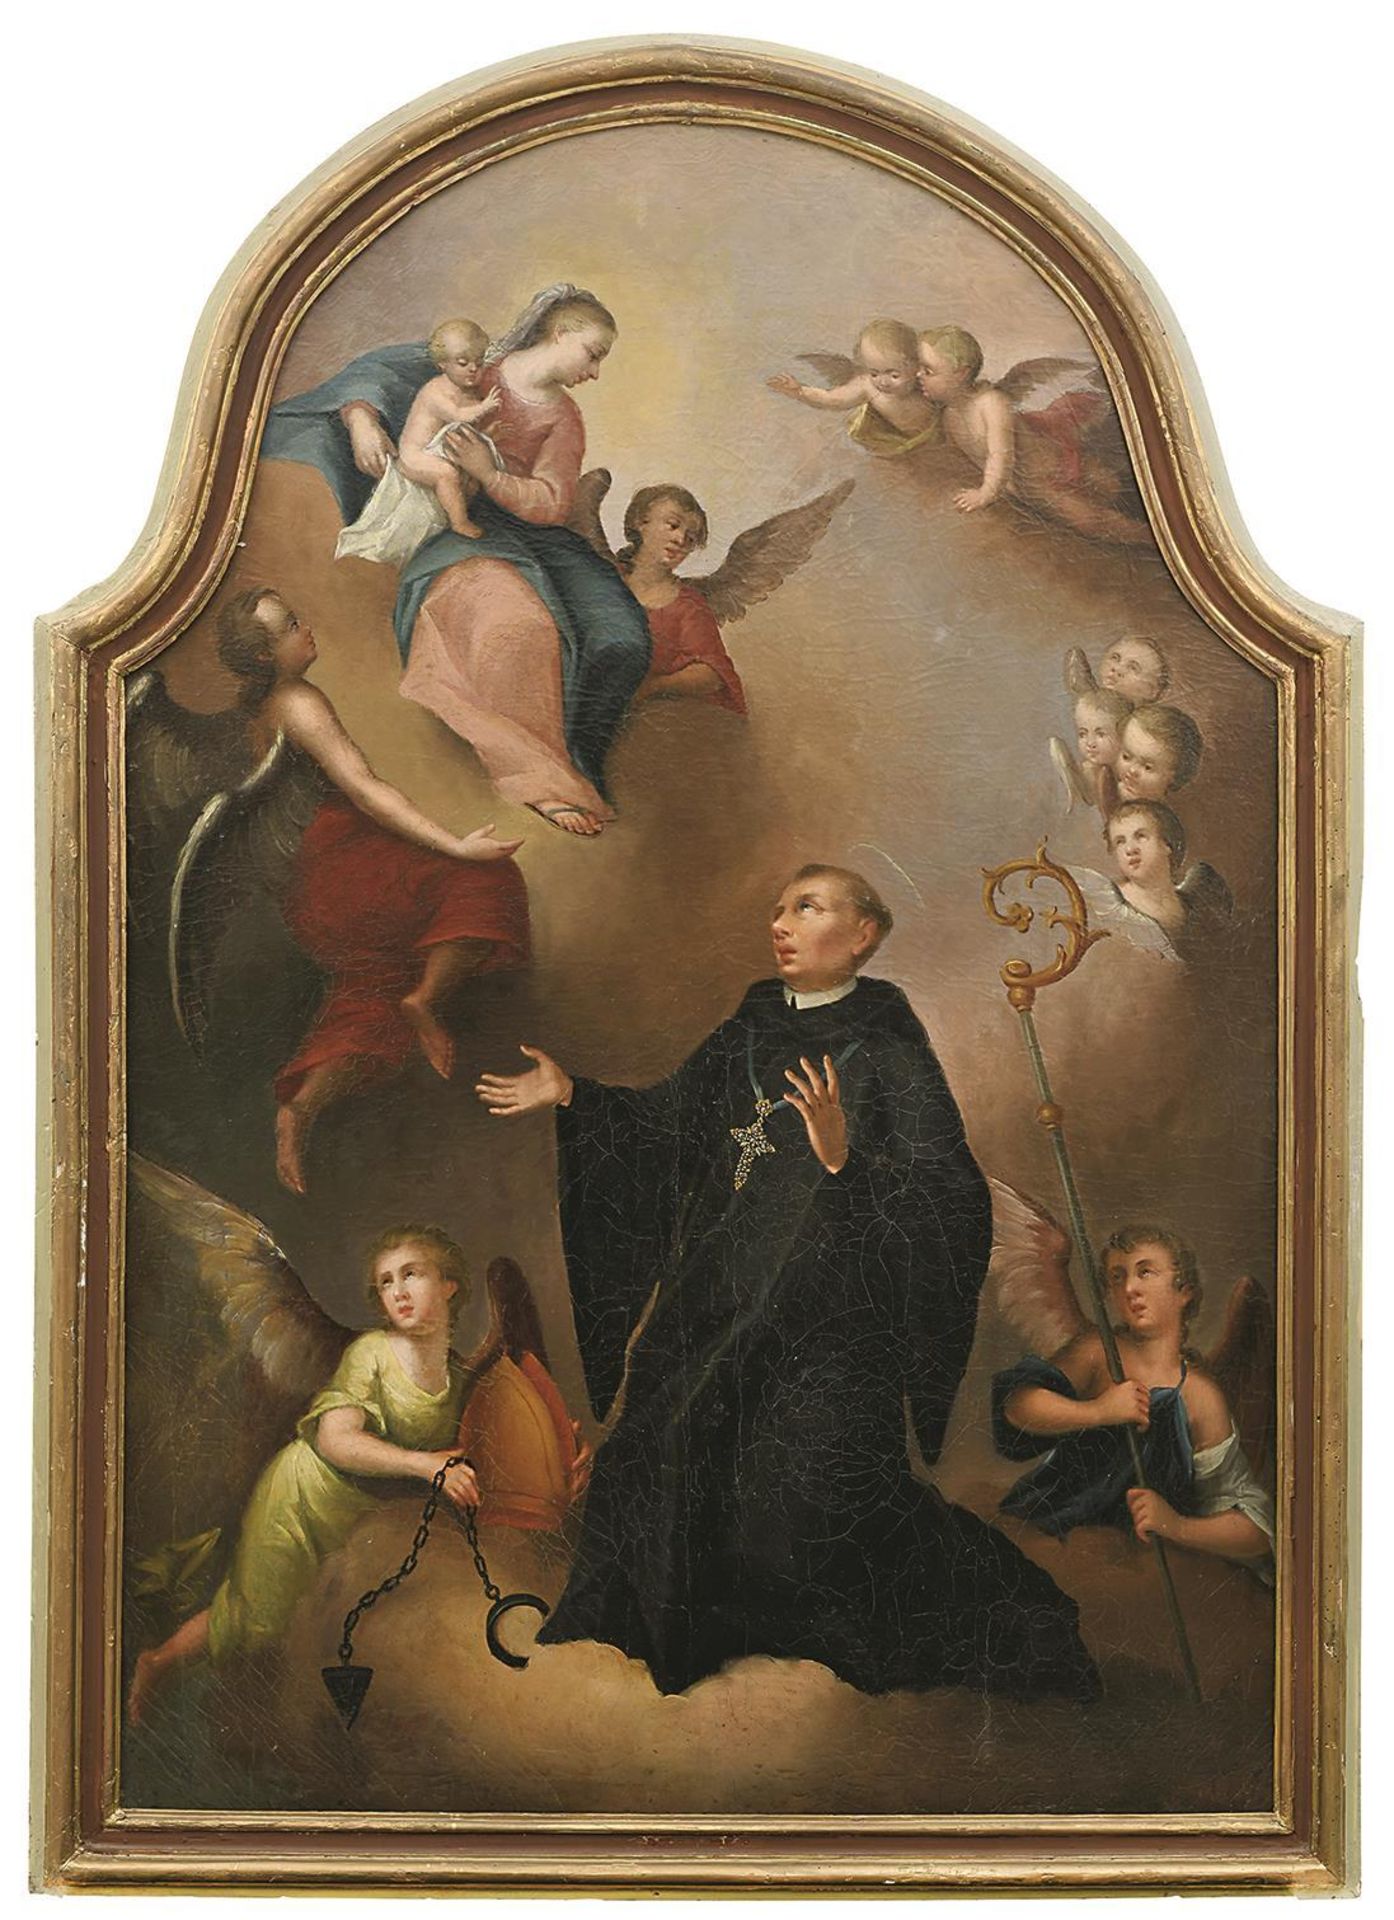 SÜDDEUTSCHLAND. Altarbild Hl. Leonhard. Öl auf Leinwand. - Image 2 of 3